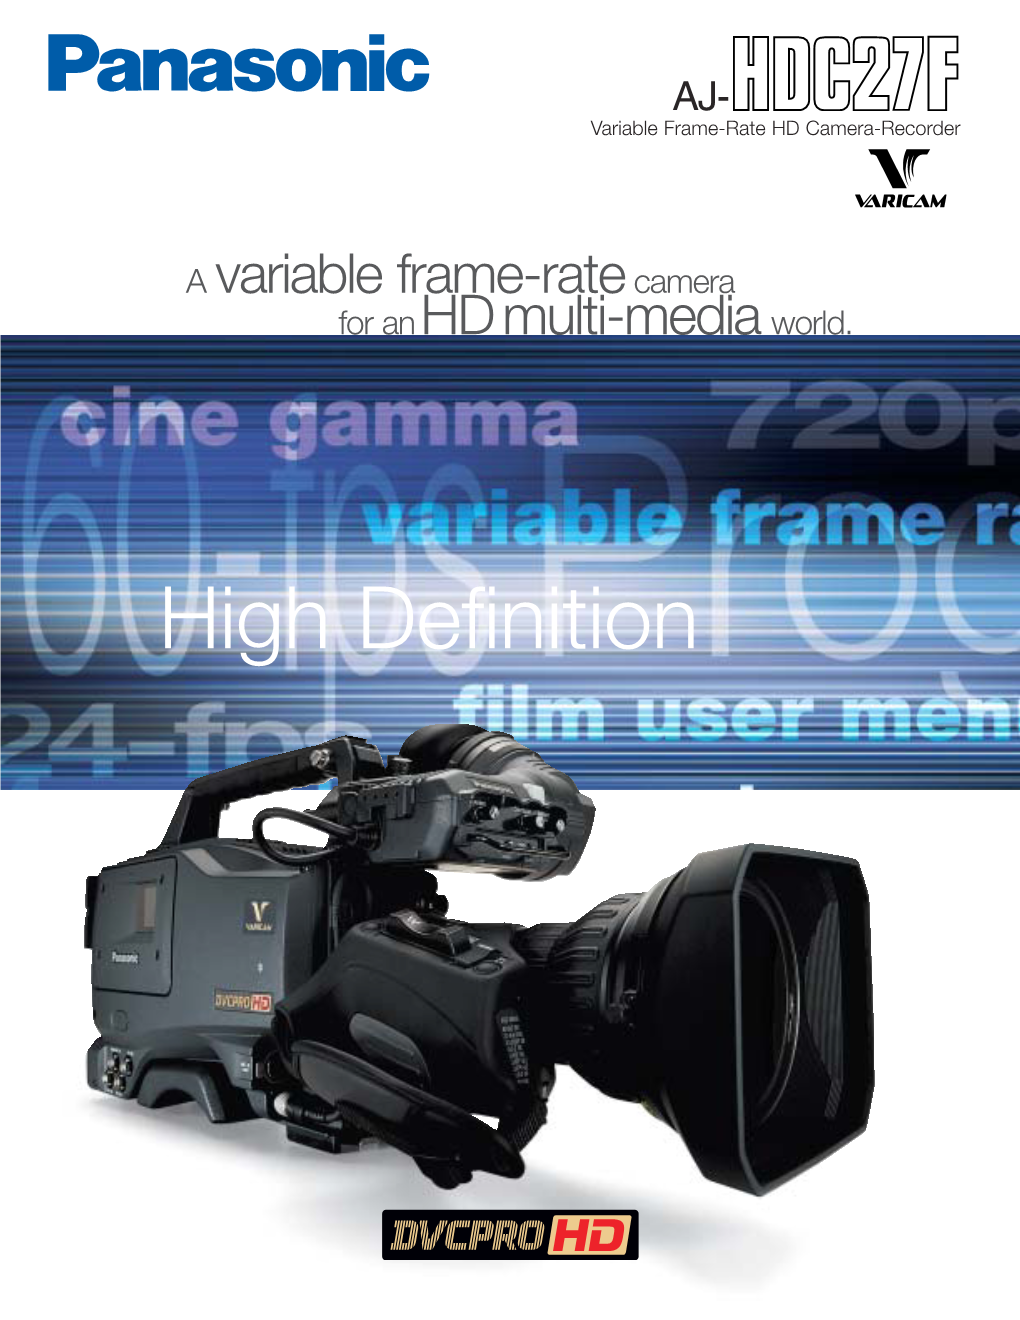 AJ- Variable Frame-Rate HD Camera-Recorder